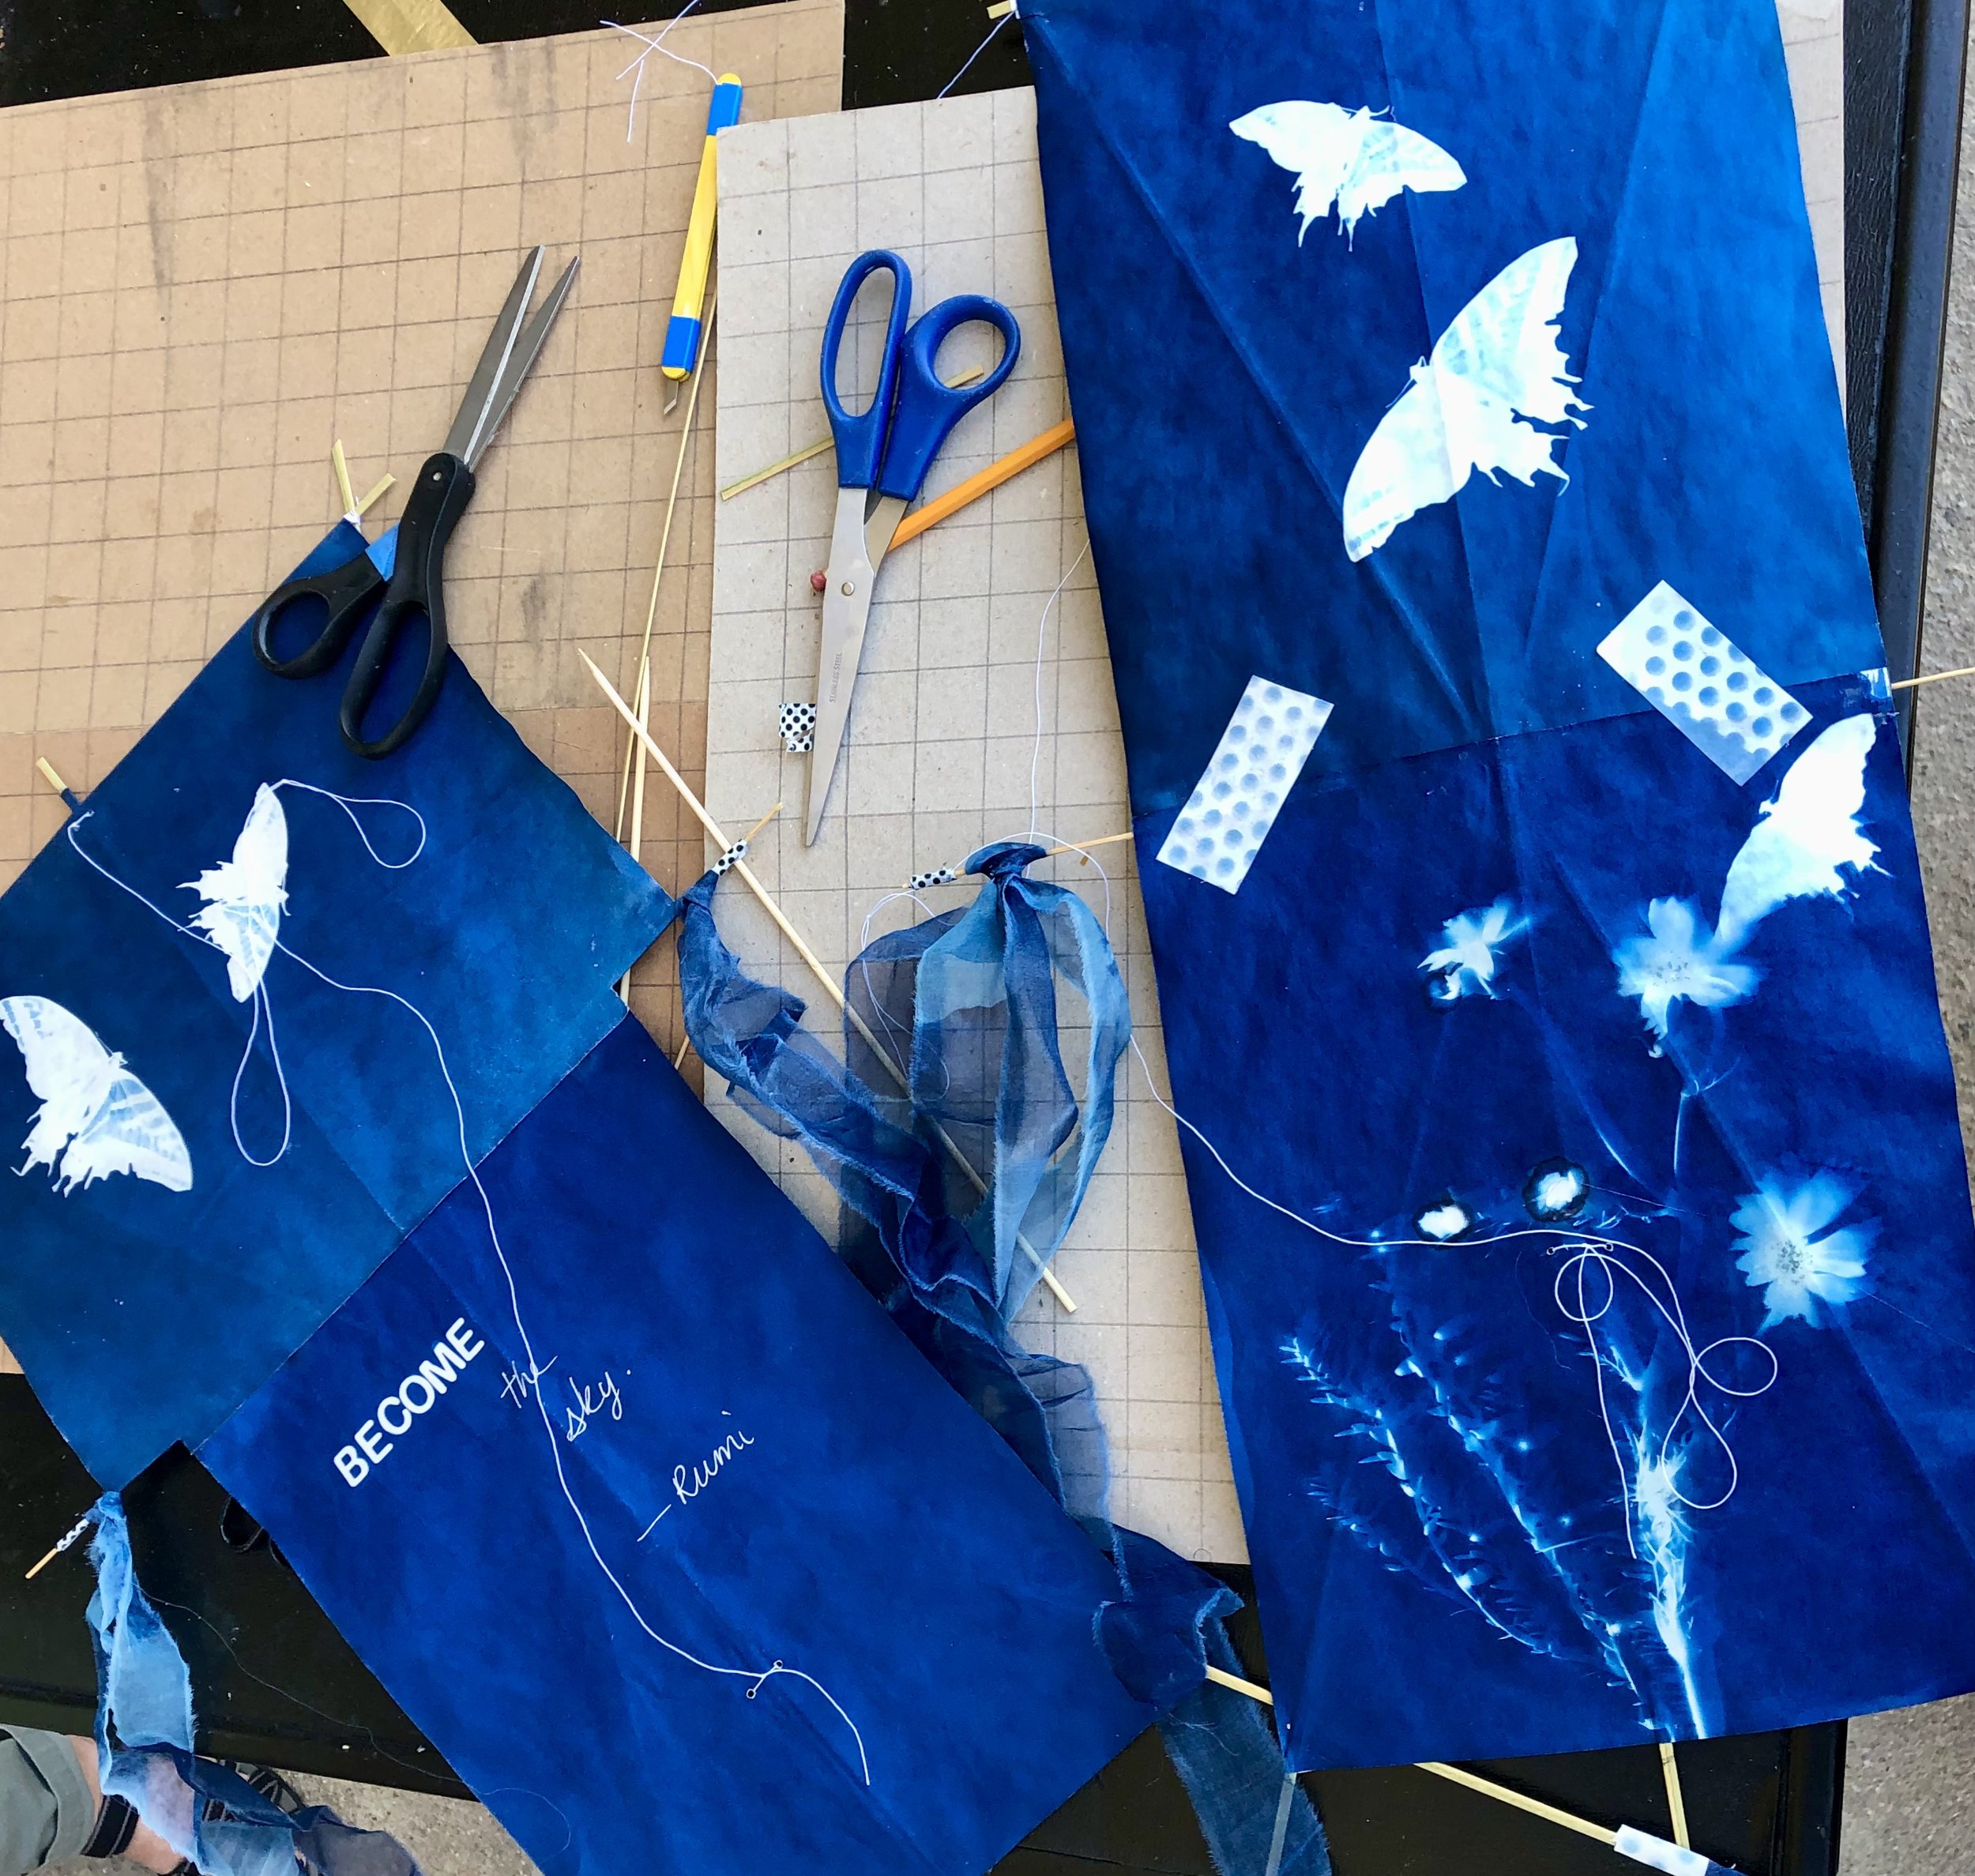  Cyanotype kites in progress. 